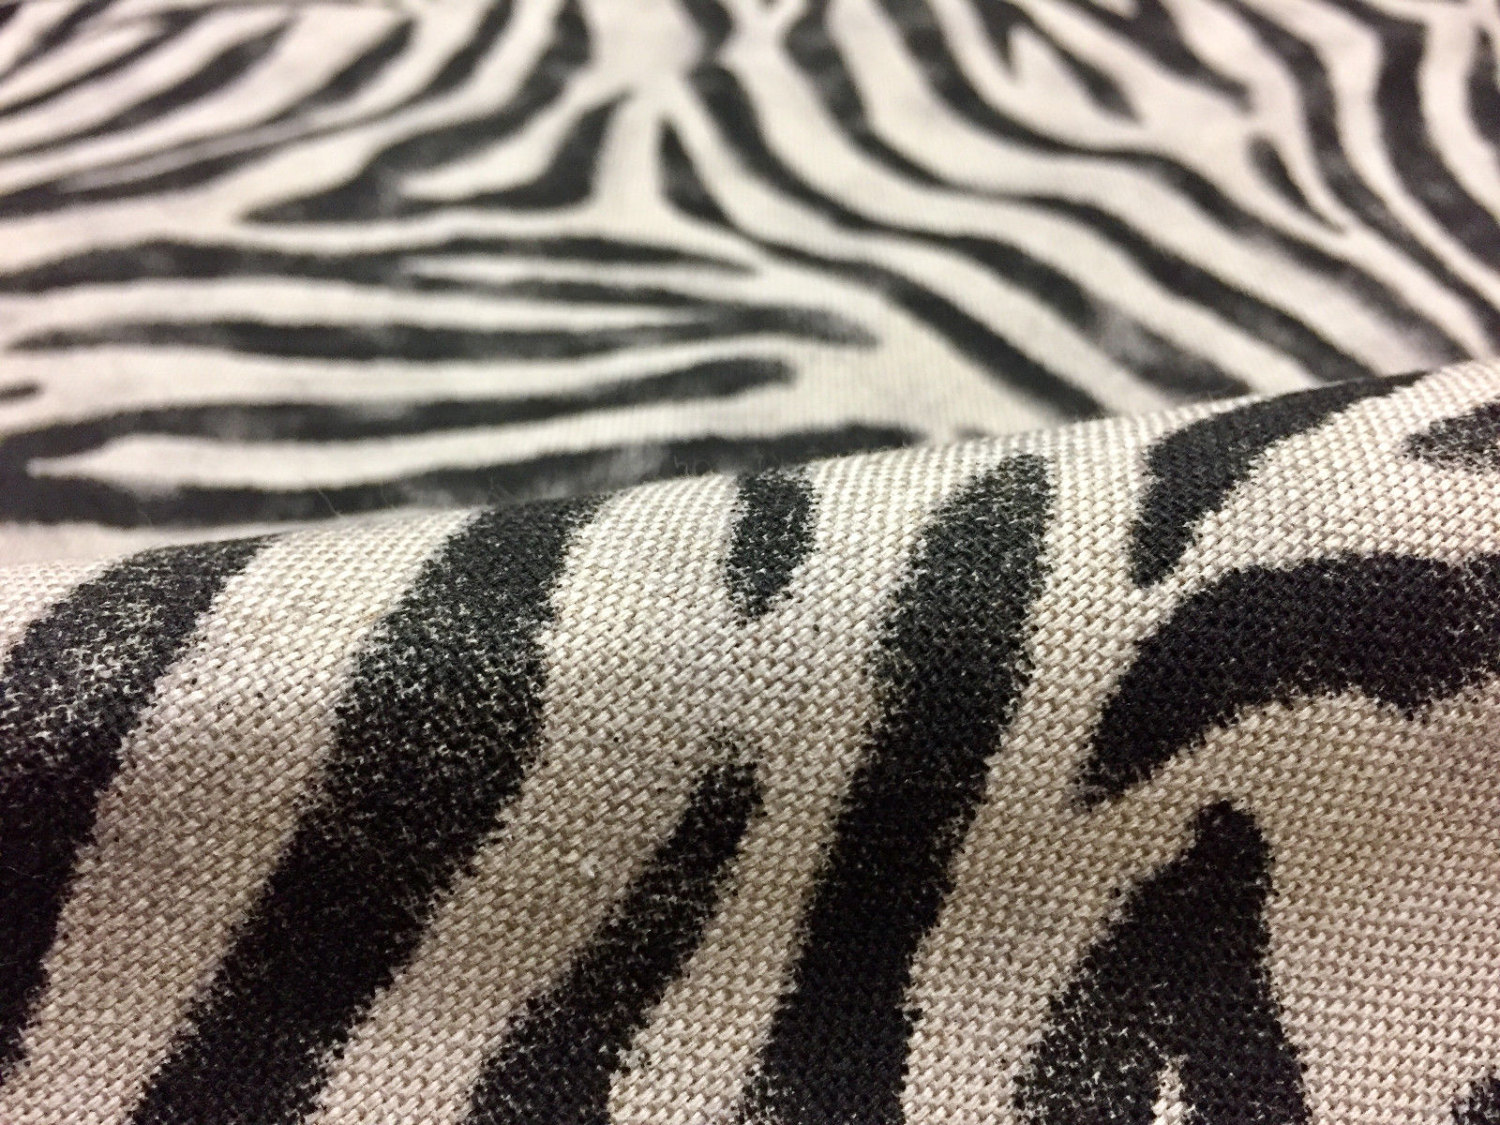 Zebra Animal Print Fabric Linen Cotton Blend Curtains Upholstery Dressmaking Linen Fabrics Black Stripes 55 Inches Wide 594bf0d51 